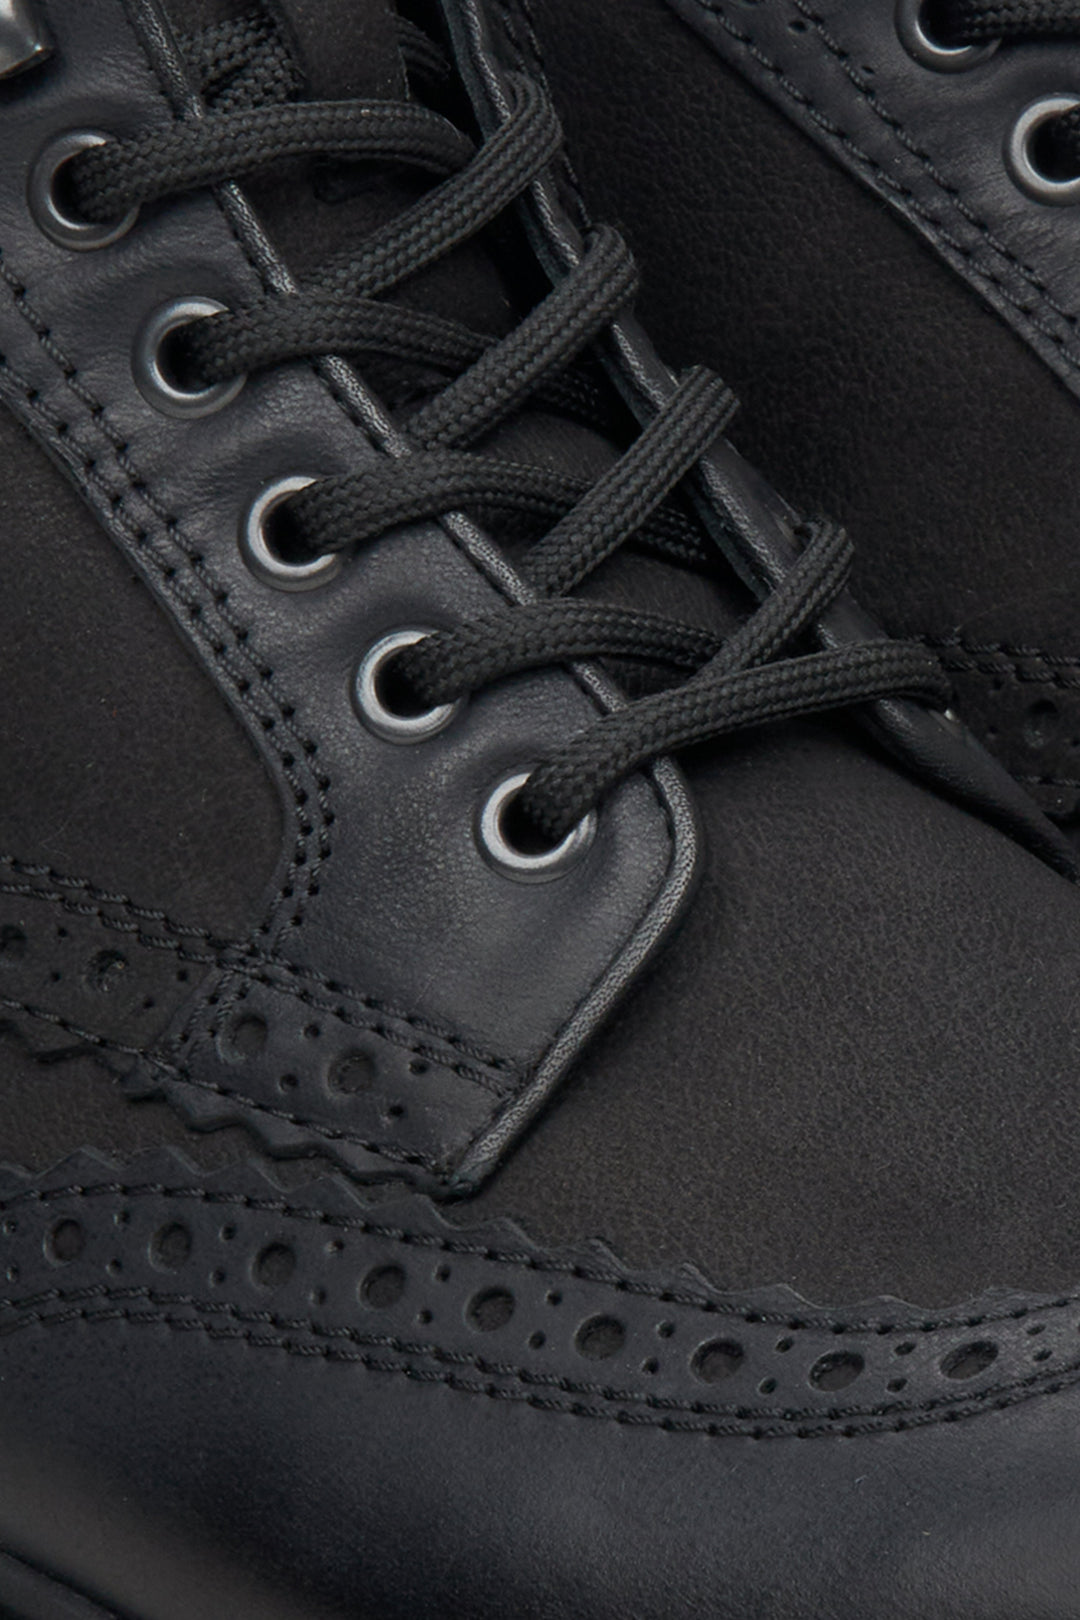 Men's black nubuck Estro winter boots - close-up on the details.